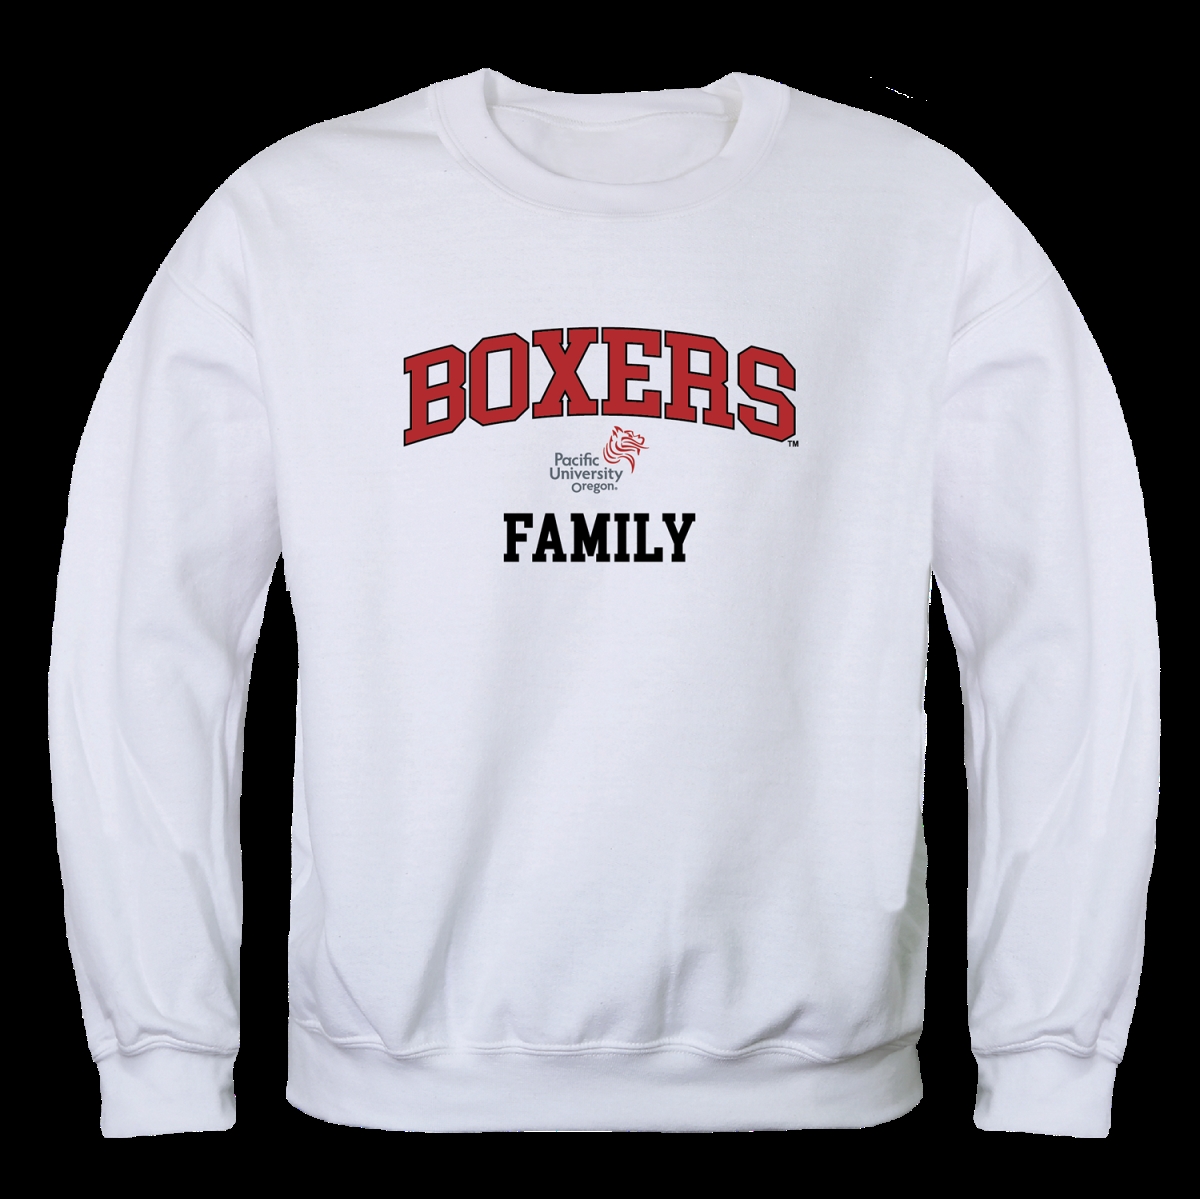 W Republic 572-567-WHT-03 Pacific University Boxers Family Crewneck Sweatshirt&#44; White - Large